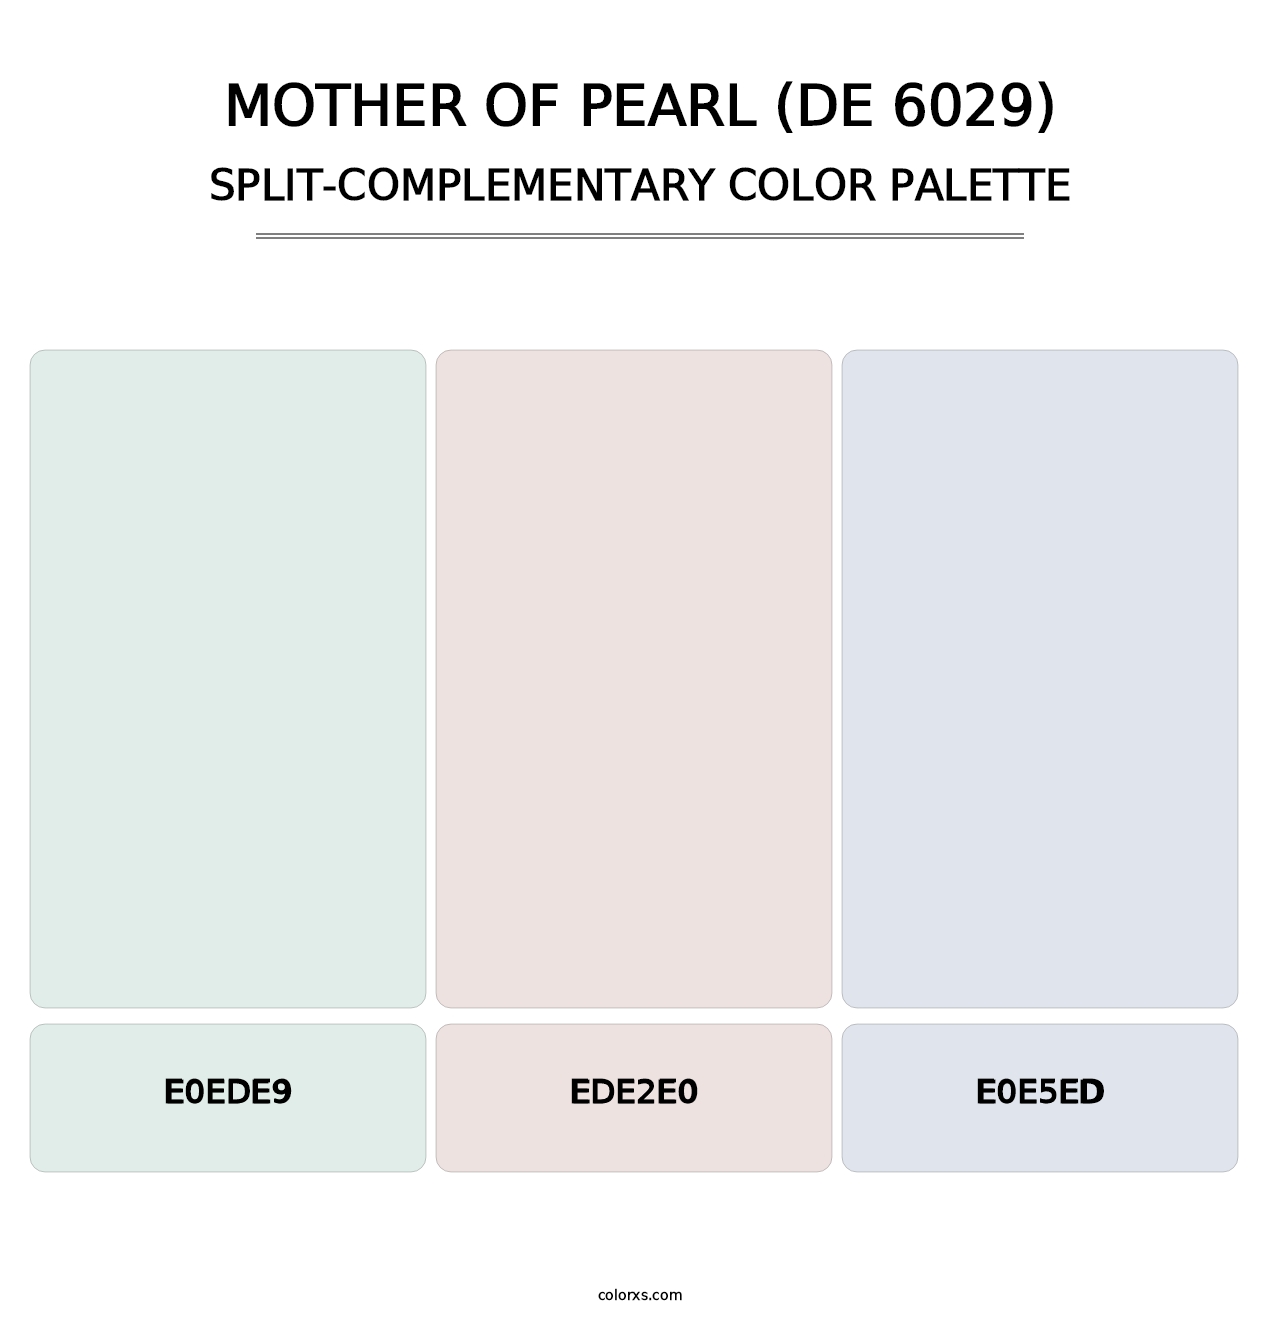 Mother of Pearl (DE 6029) - Split-Complementary Color Palette